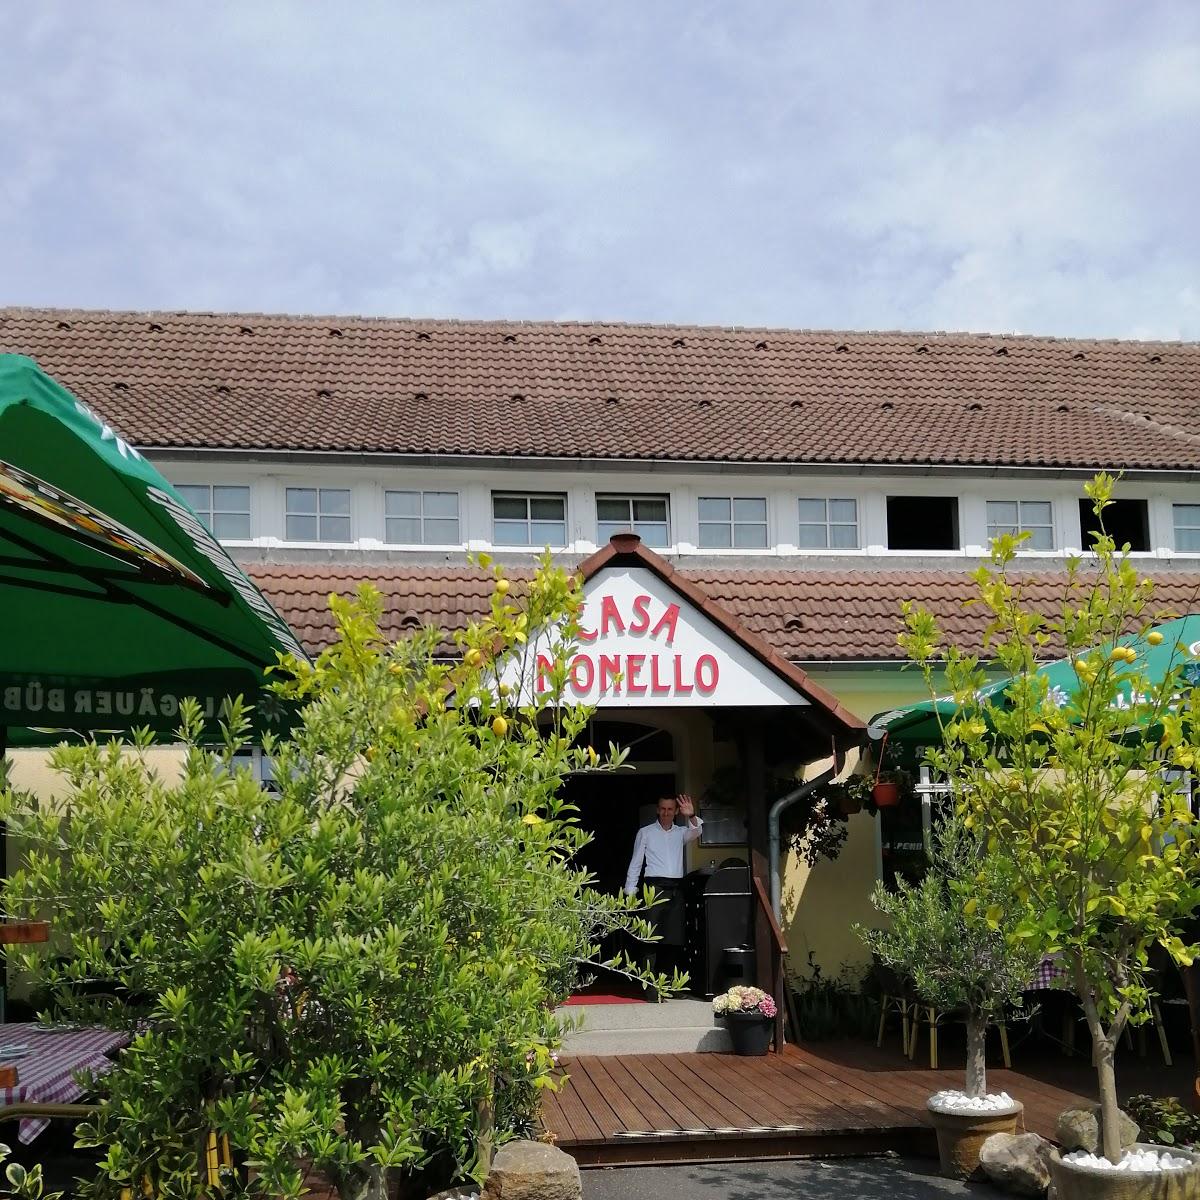 Restaurant "Ristorante Pizzeria Casa Monello" in Kolkwitz